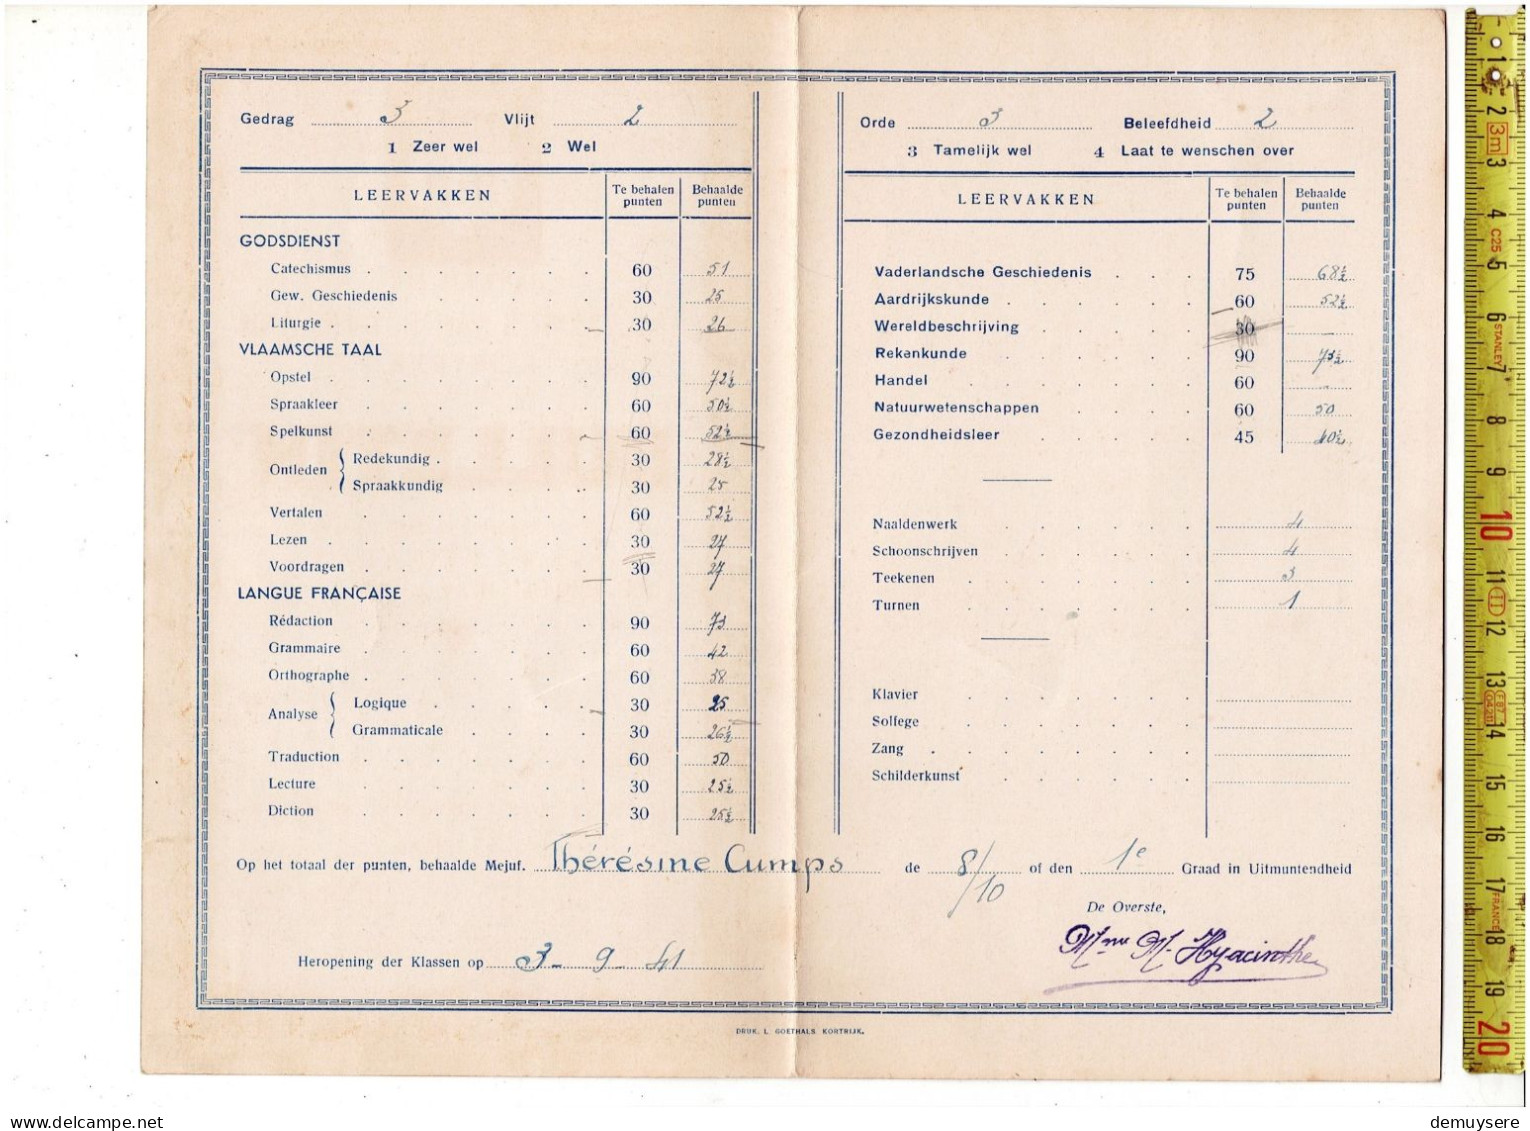 SOLDE 3287 - GESTICHT DER DAMES VAN ST NIKLAAS KORTRIJK - BULLETIN 1940 - 1941 - Diplômes & Bulletins Scolaires